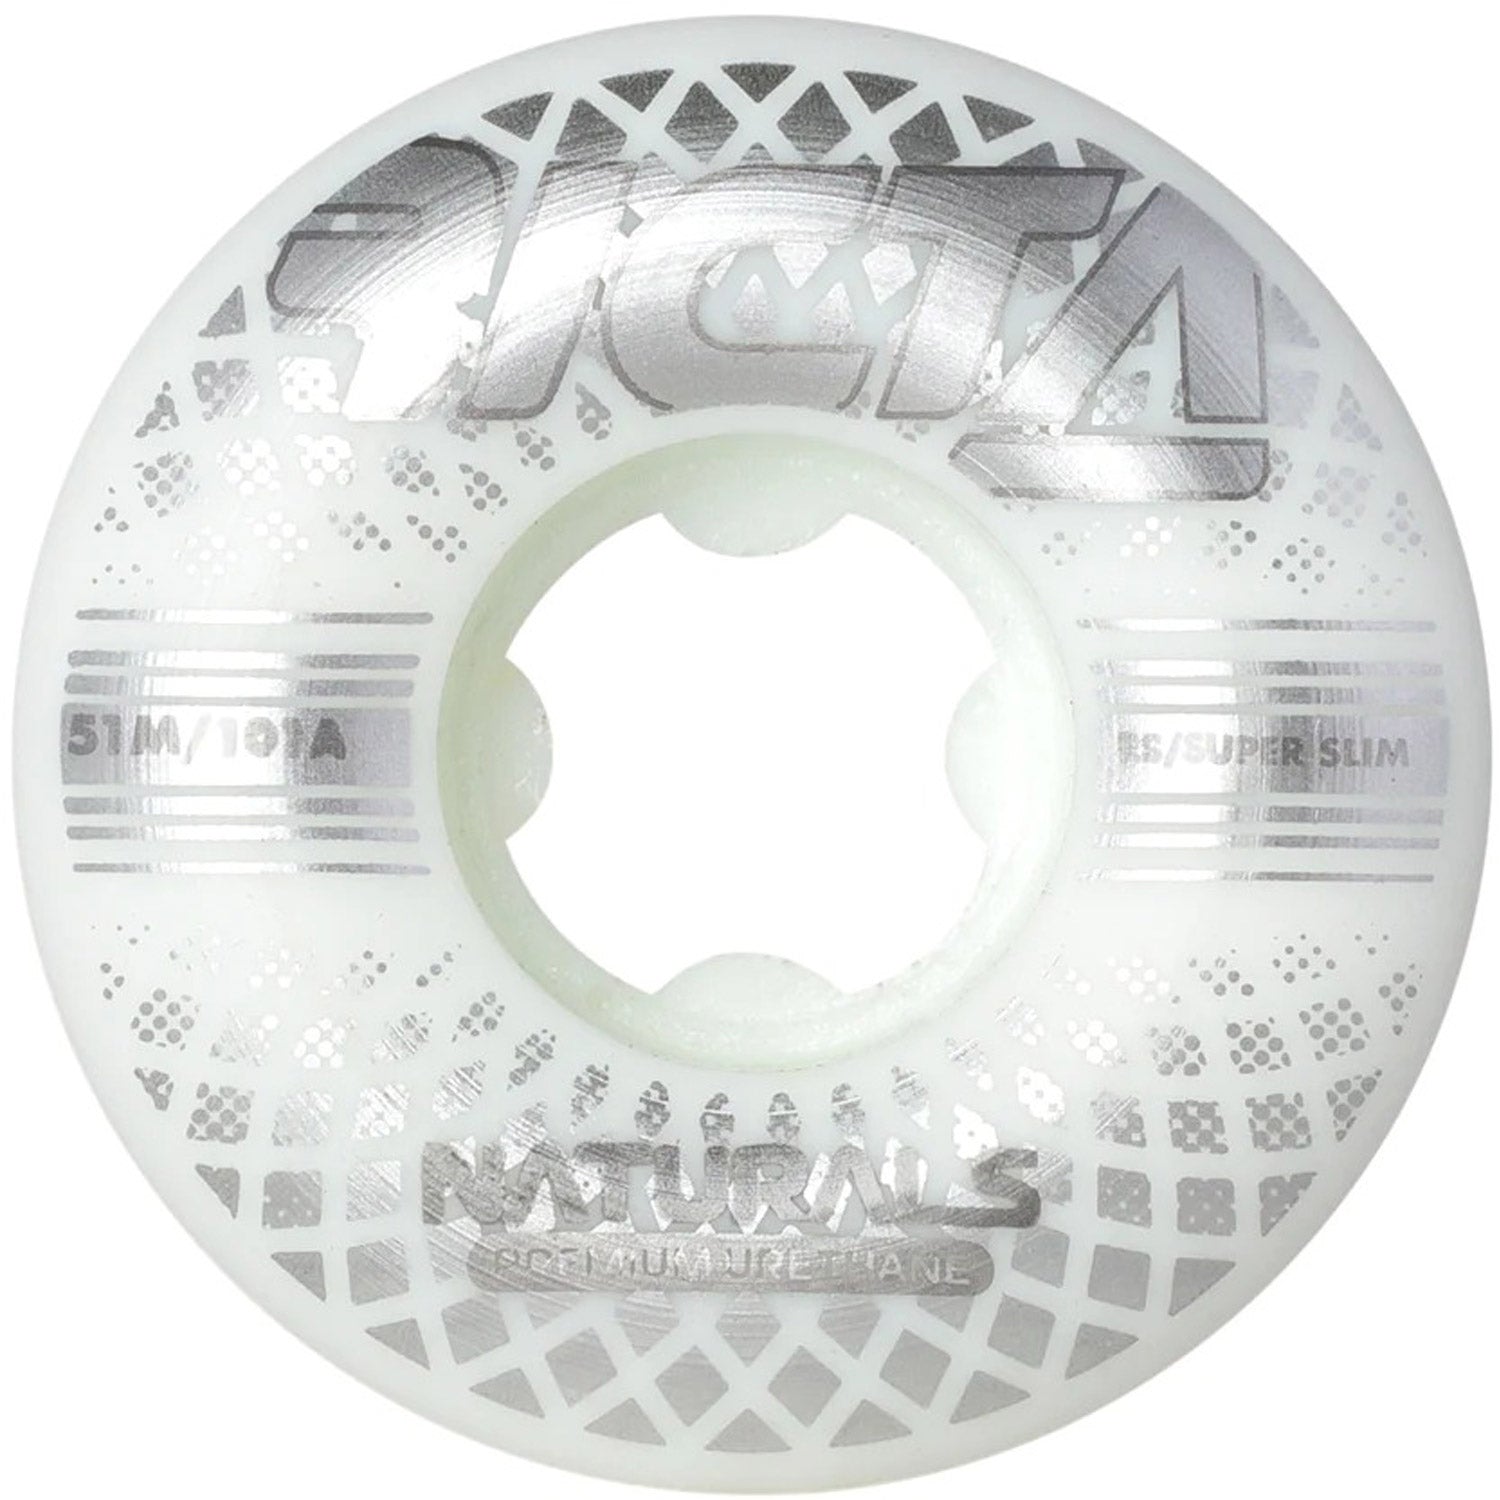 51mm Reflective Naturals Slim 101a Skateboard Wheels